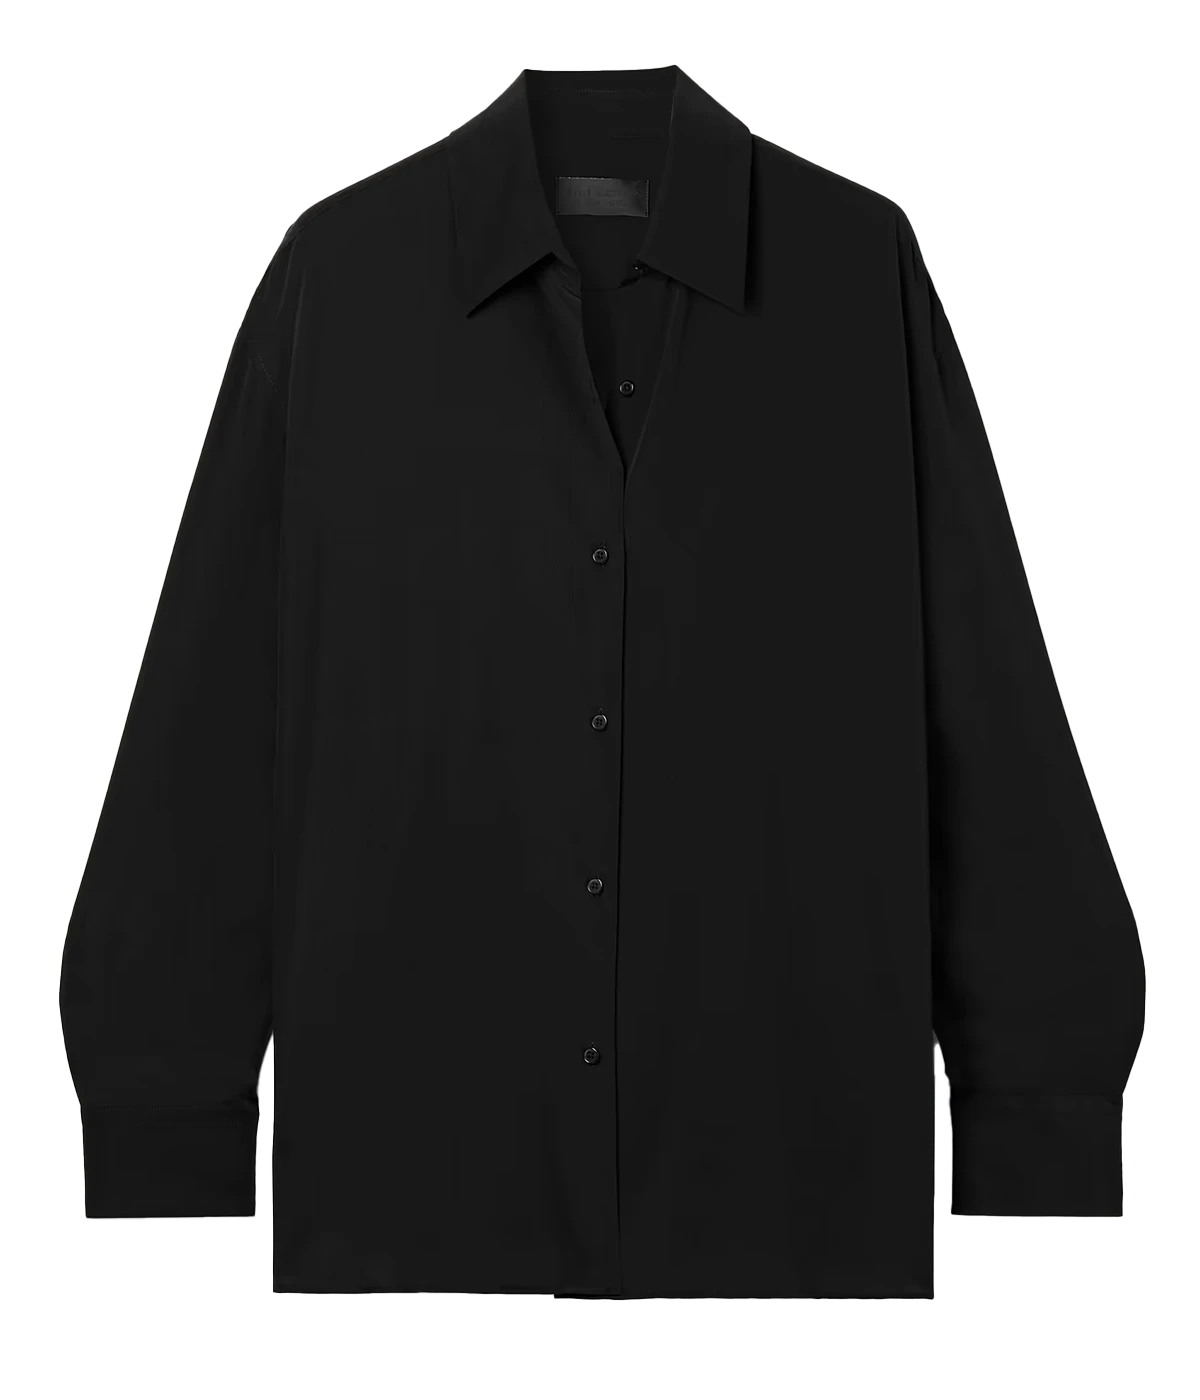 Julien Shirt in Black